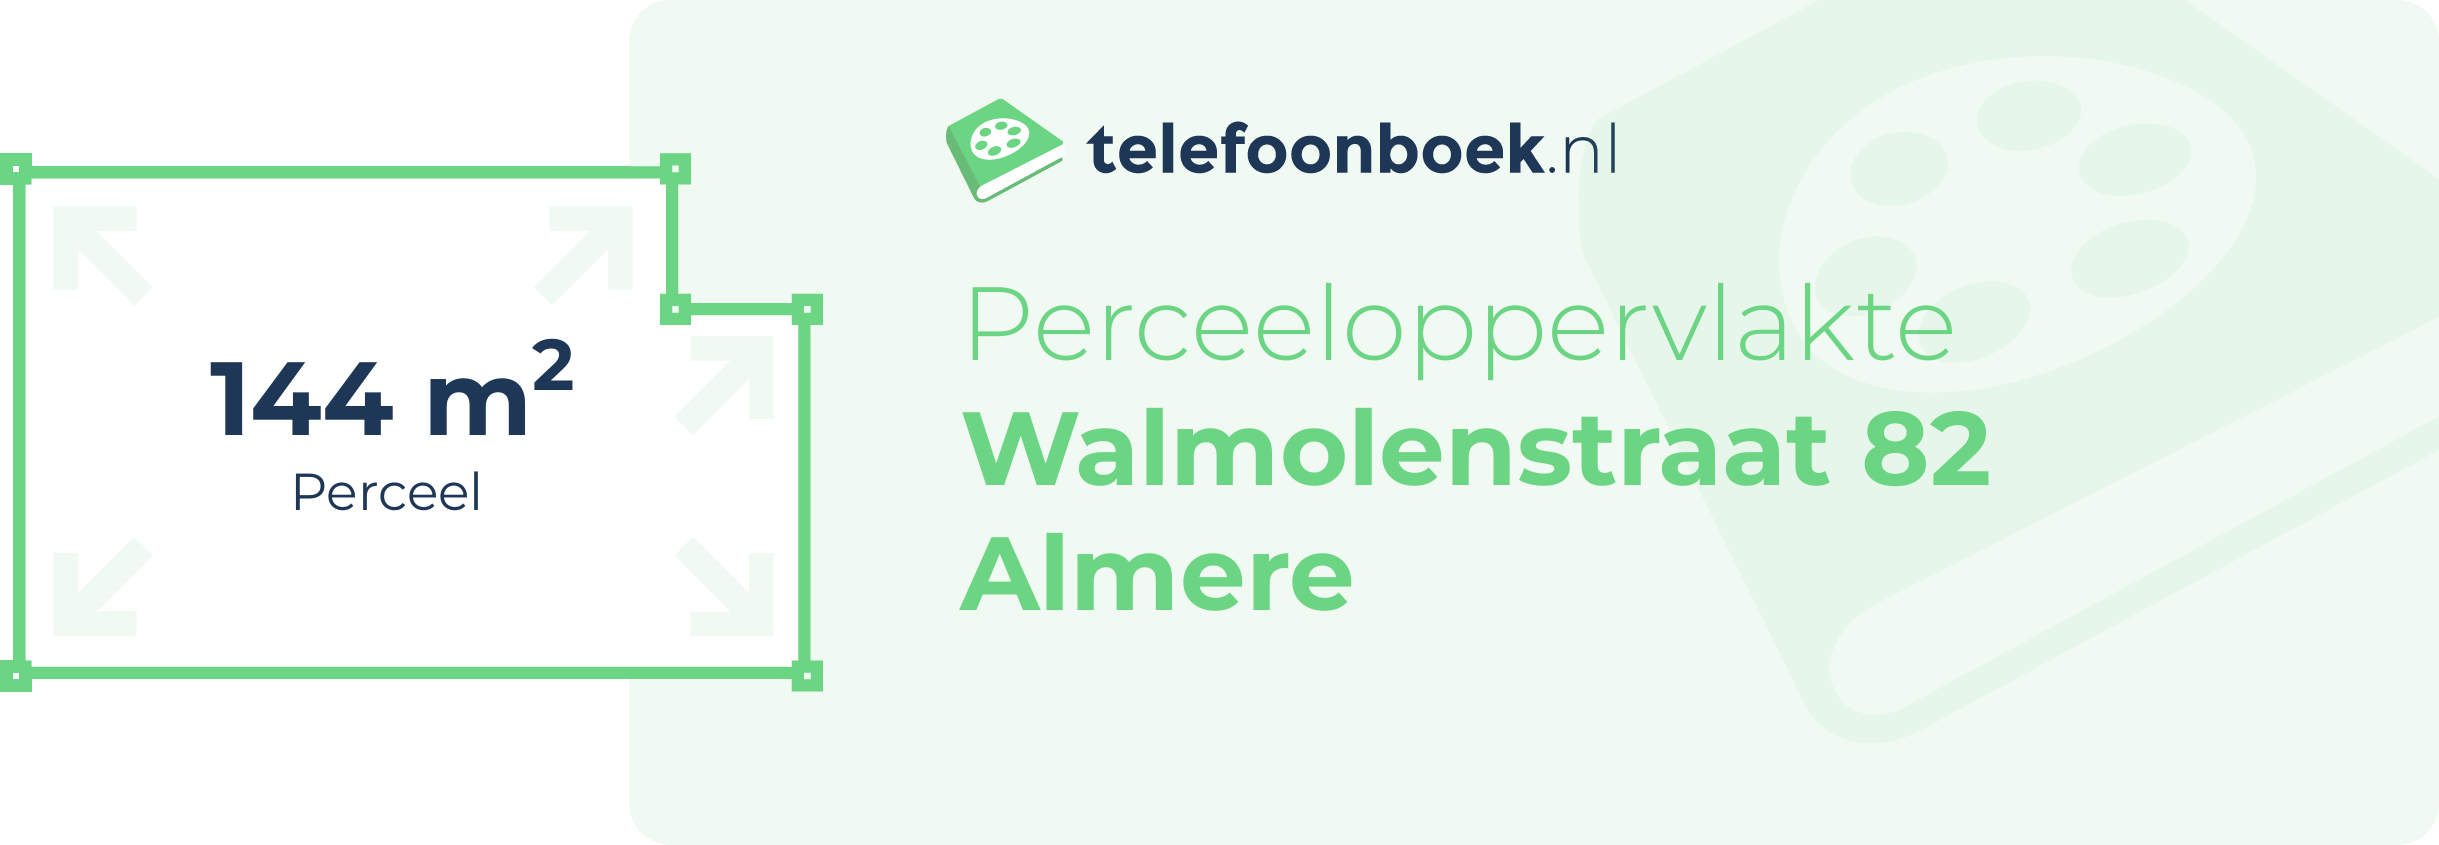 Perceeloppervlakte Walmolenstraat 82 Almere